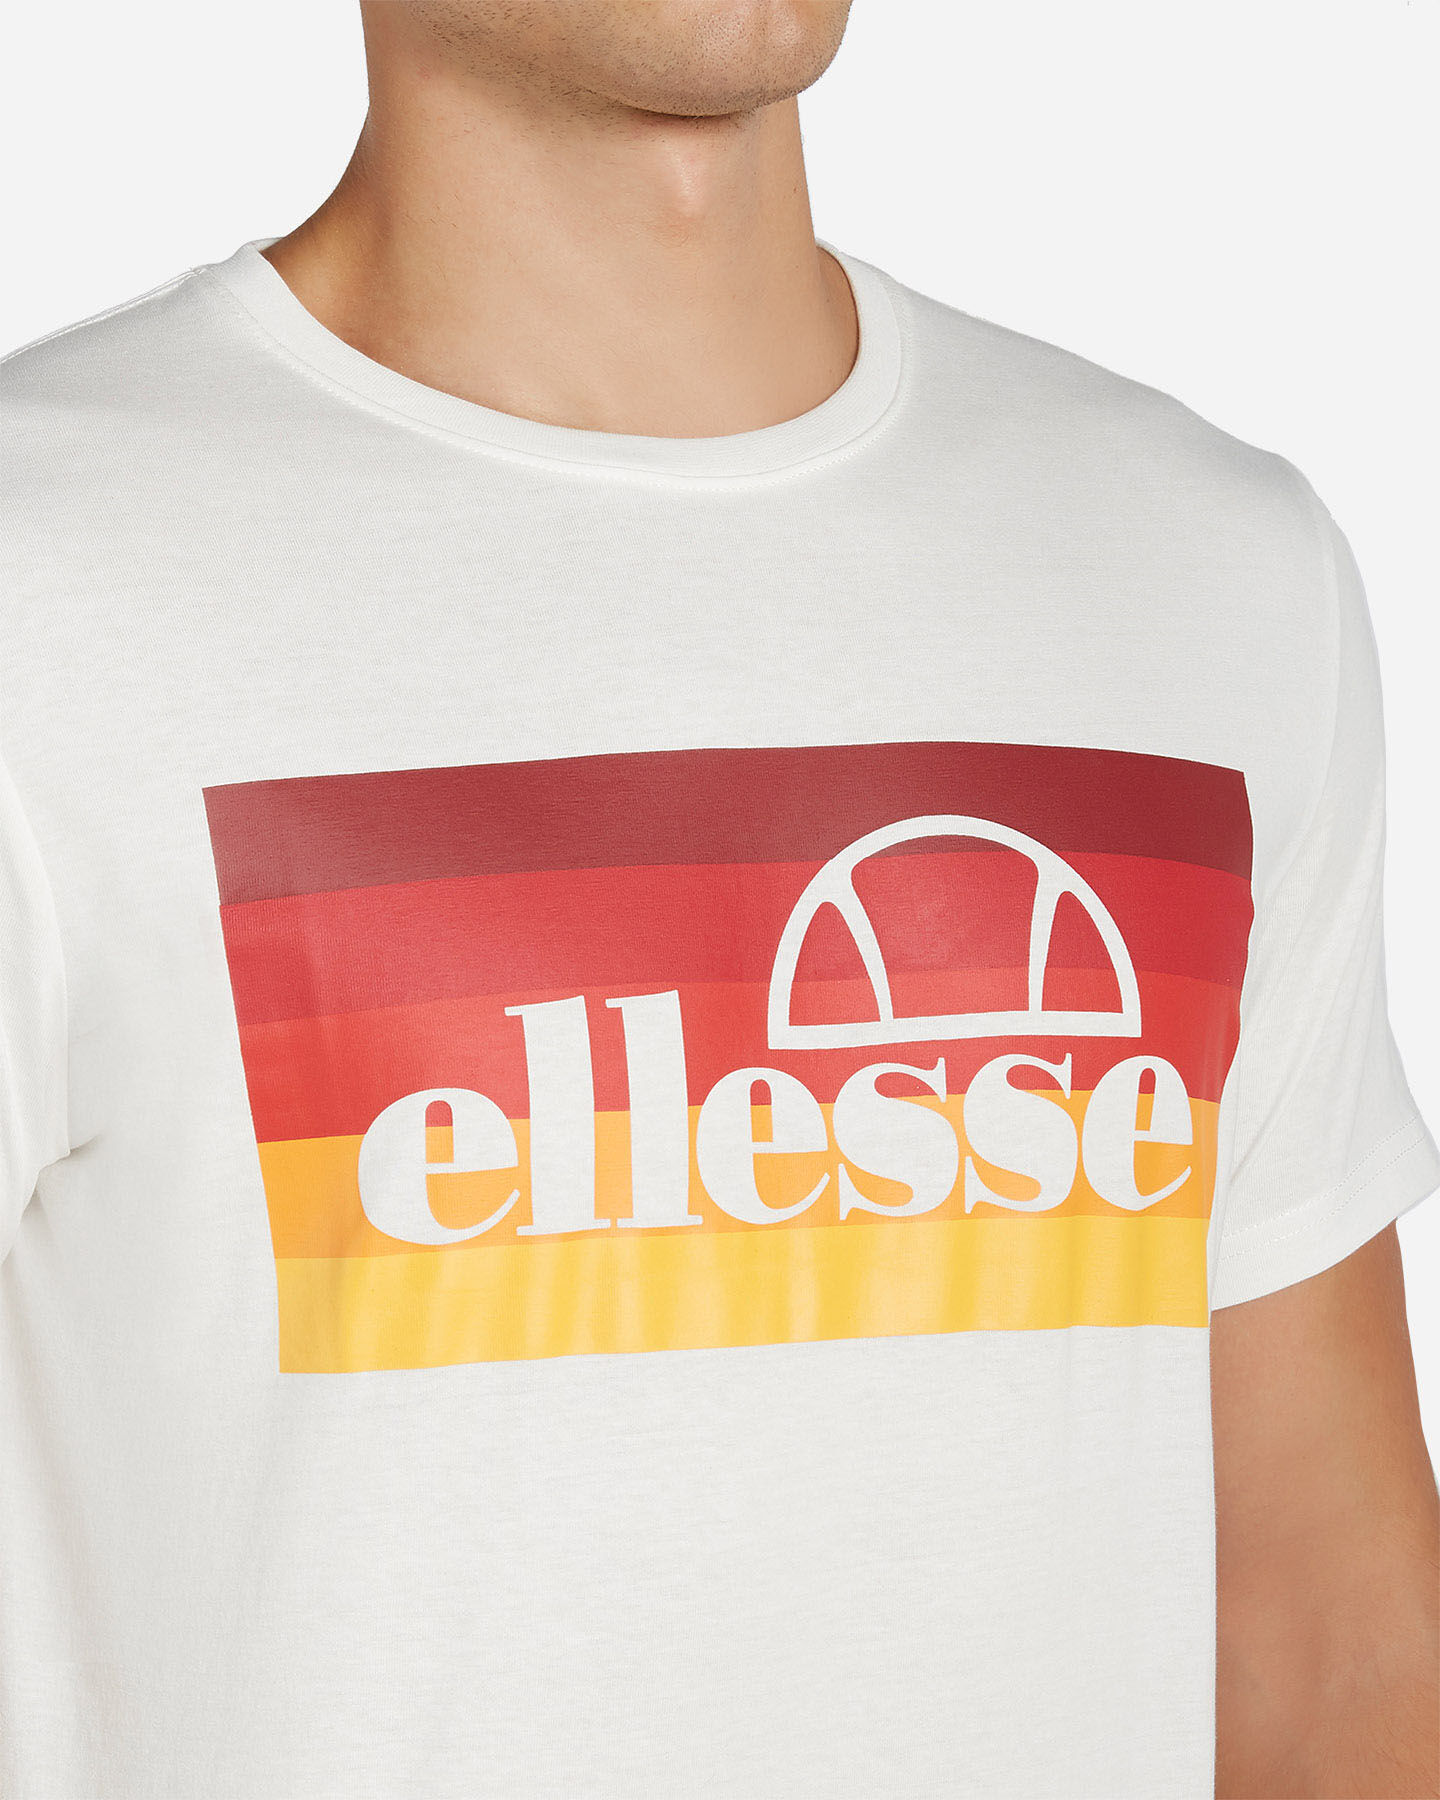  T-Shirt ELLESSE RAINBOW M S5089620|002|S scatto 4